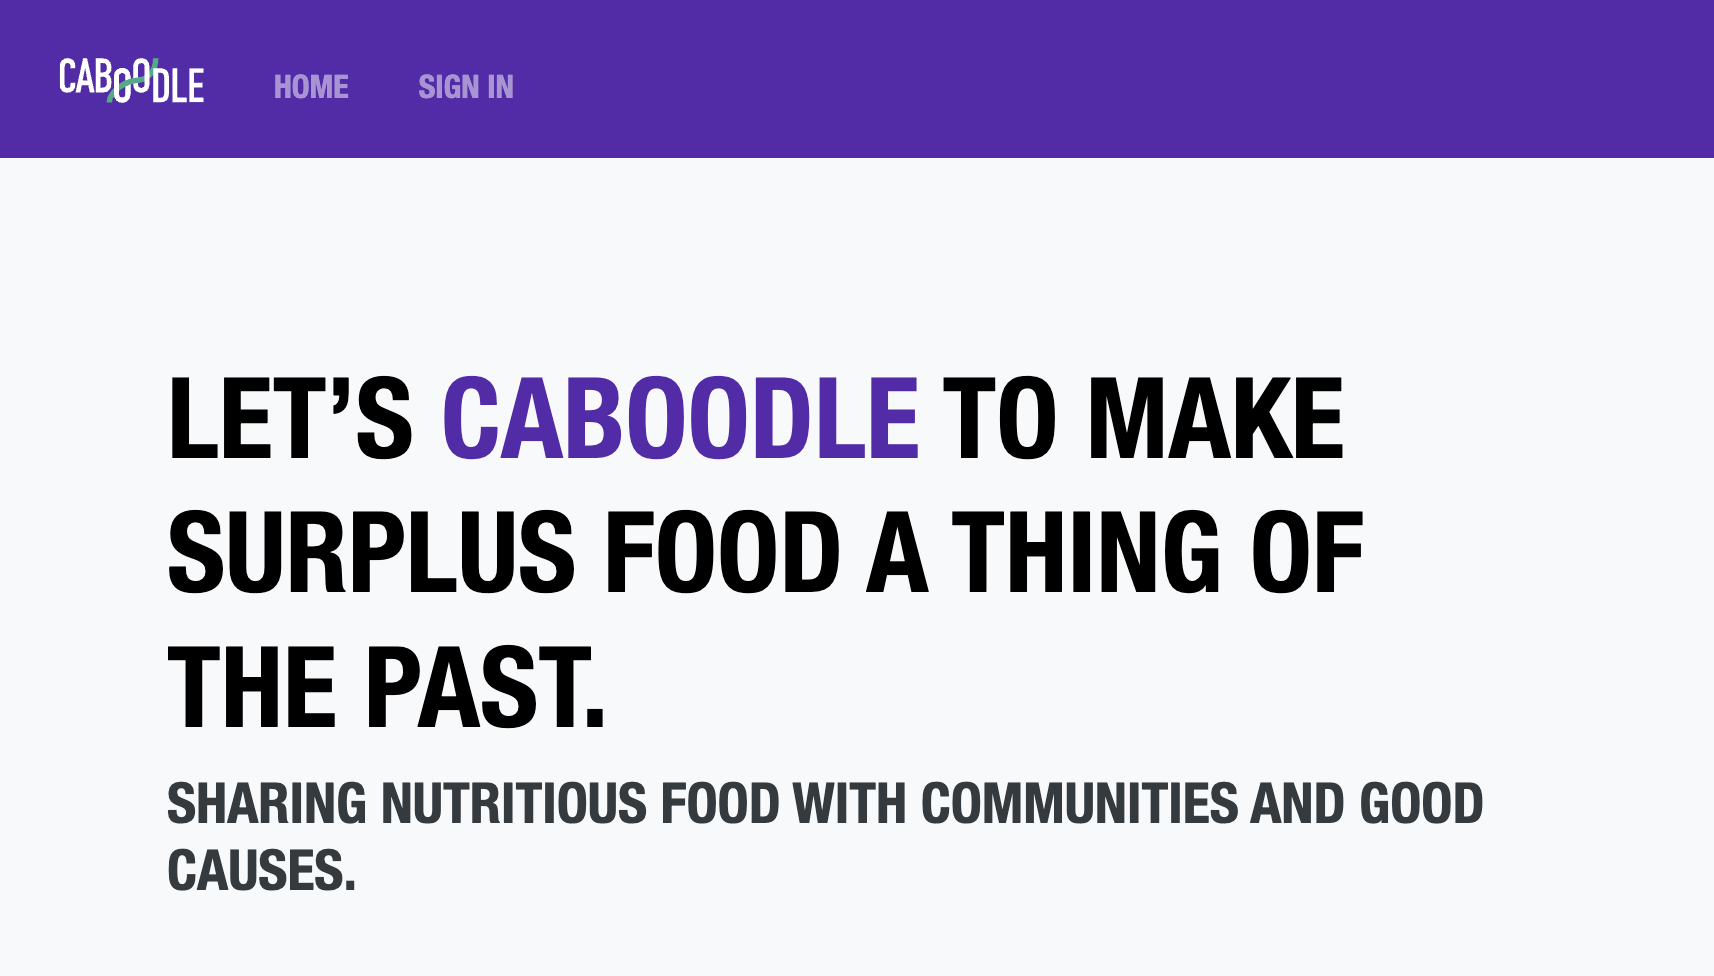 Co-op Caboodle surplus food app scheme